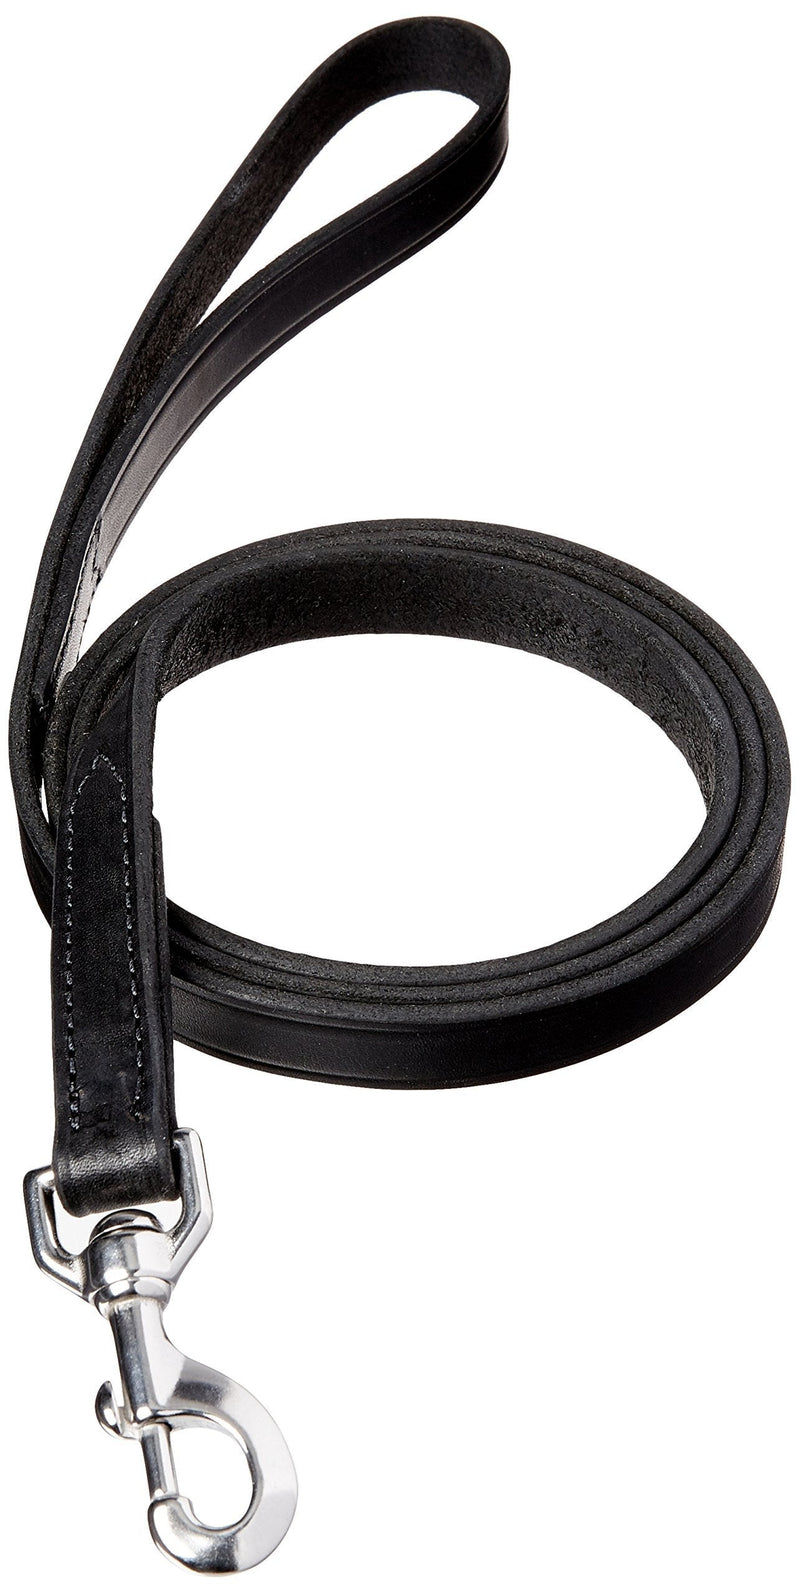 [Australia] - Perri's Plain Leather Dog Leash, 3/4-Inch x 5-Feet Regular - 3/4in x 5ft Black 